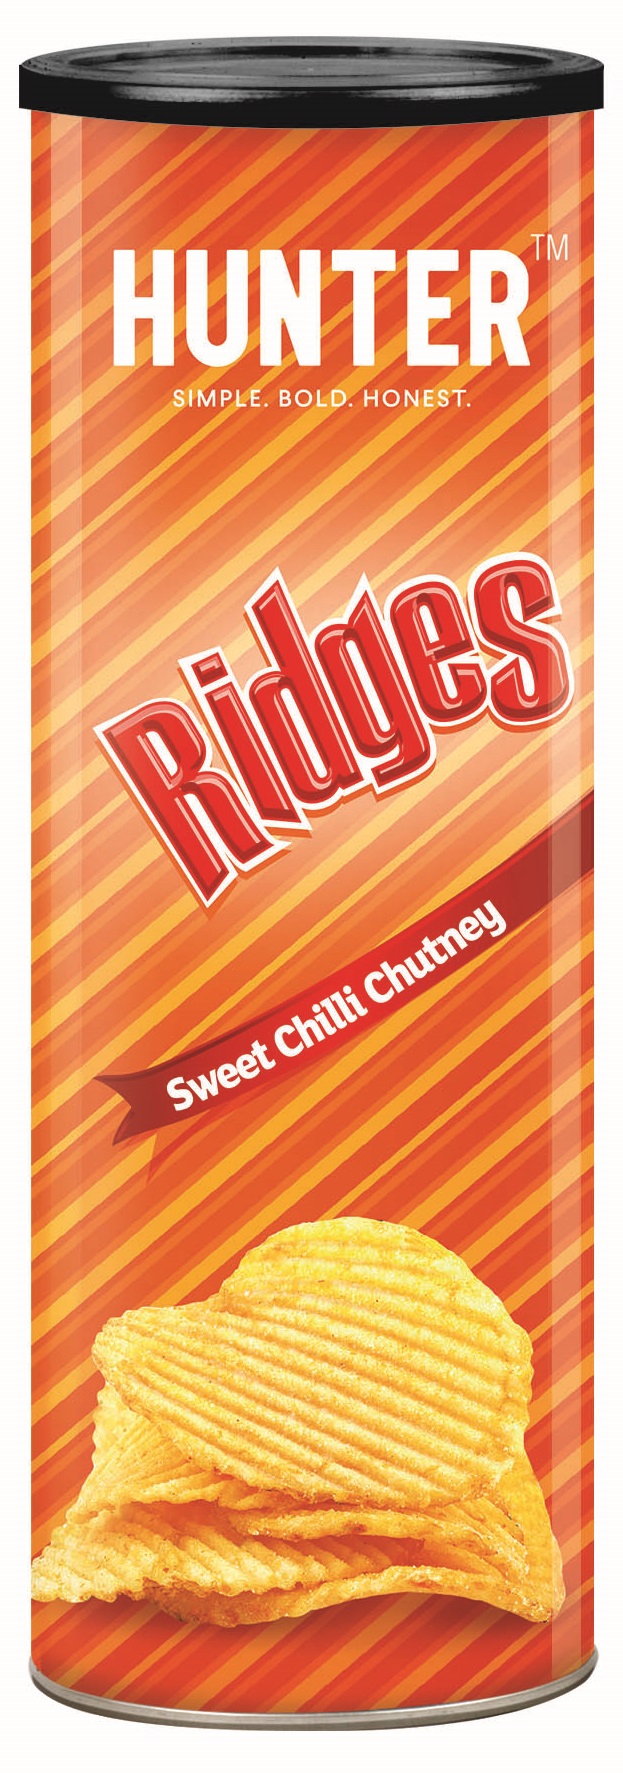 Hunter Foods Ridges Sweet Chilli Chutney 12 units per case 75 g